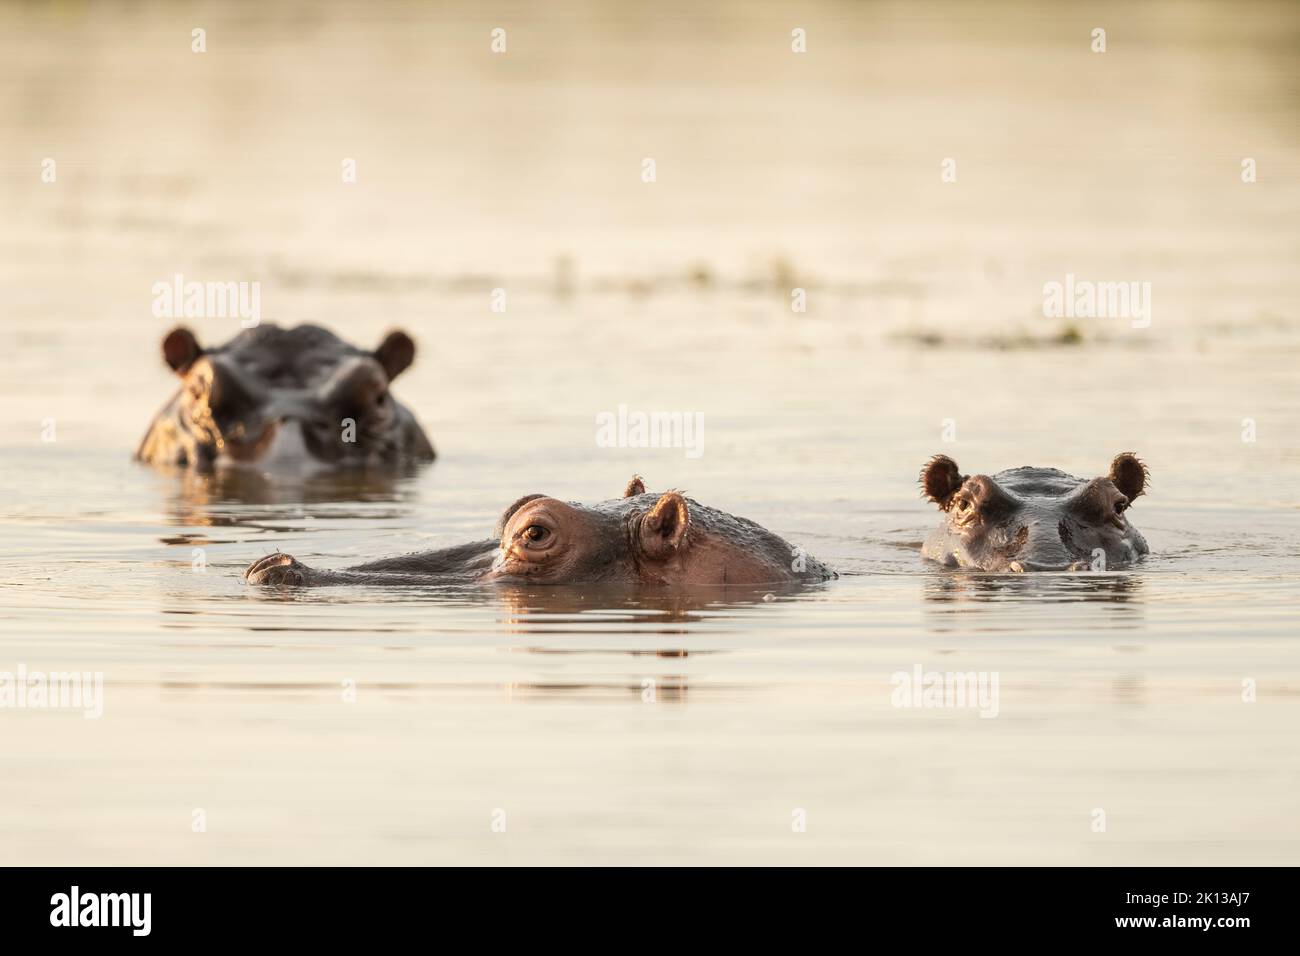 Hippo in Motlhabatsi River, Marataba, Marakele National Park, South Africa, Africa Stock Photo